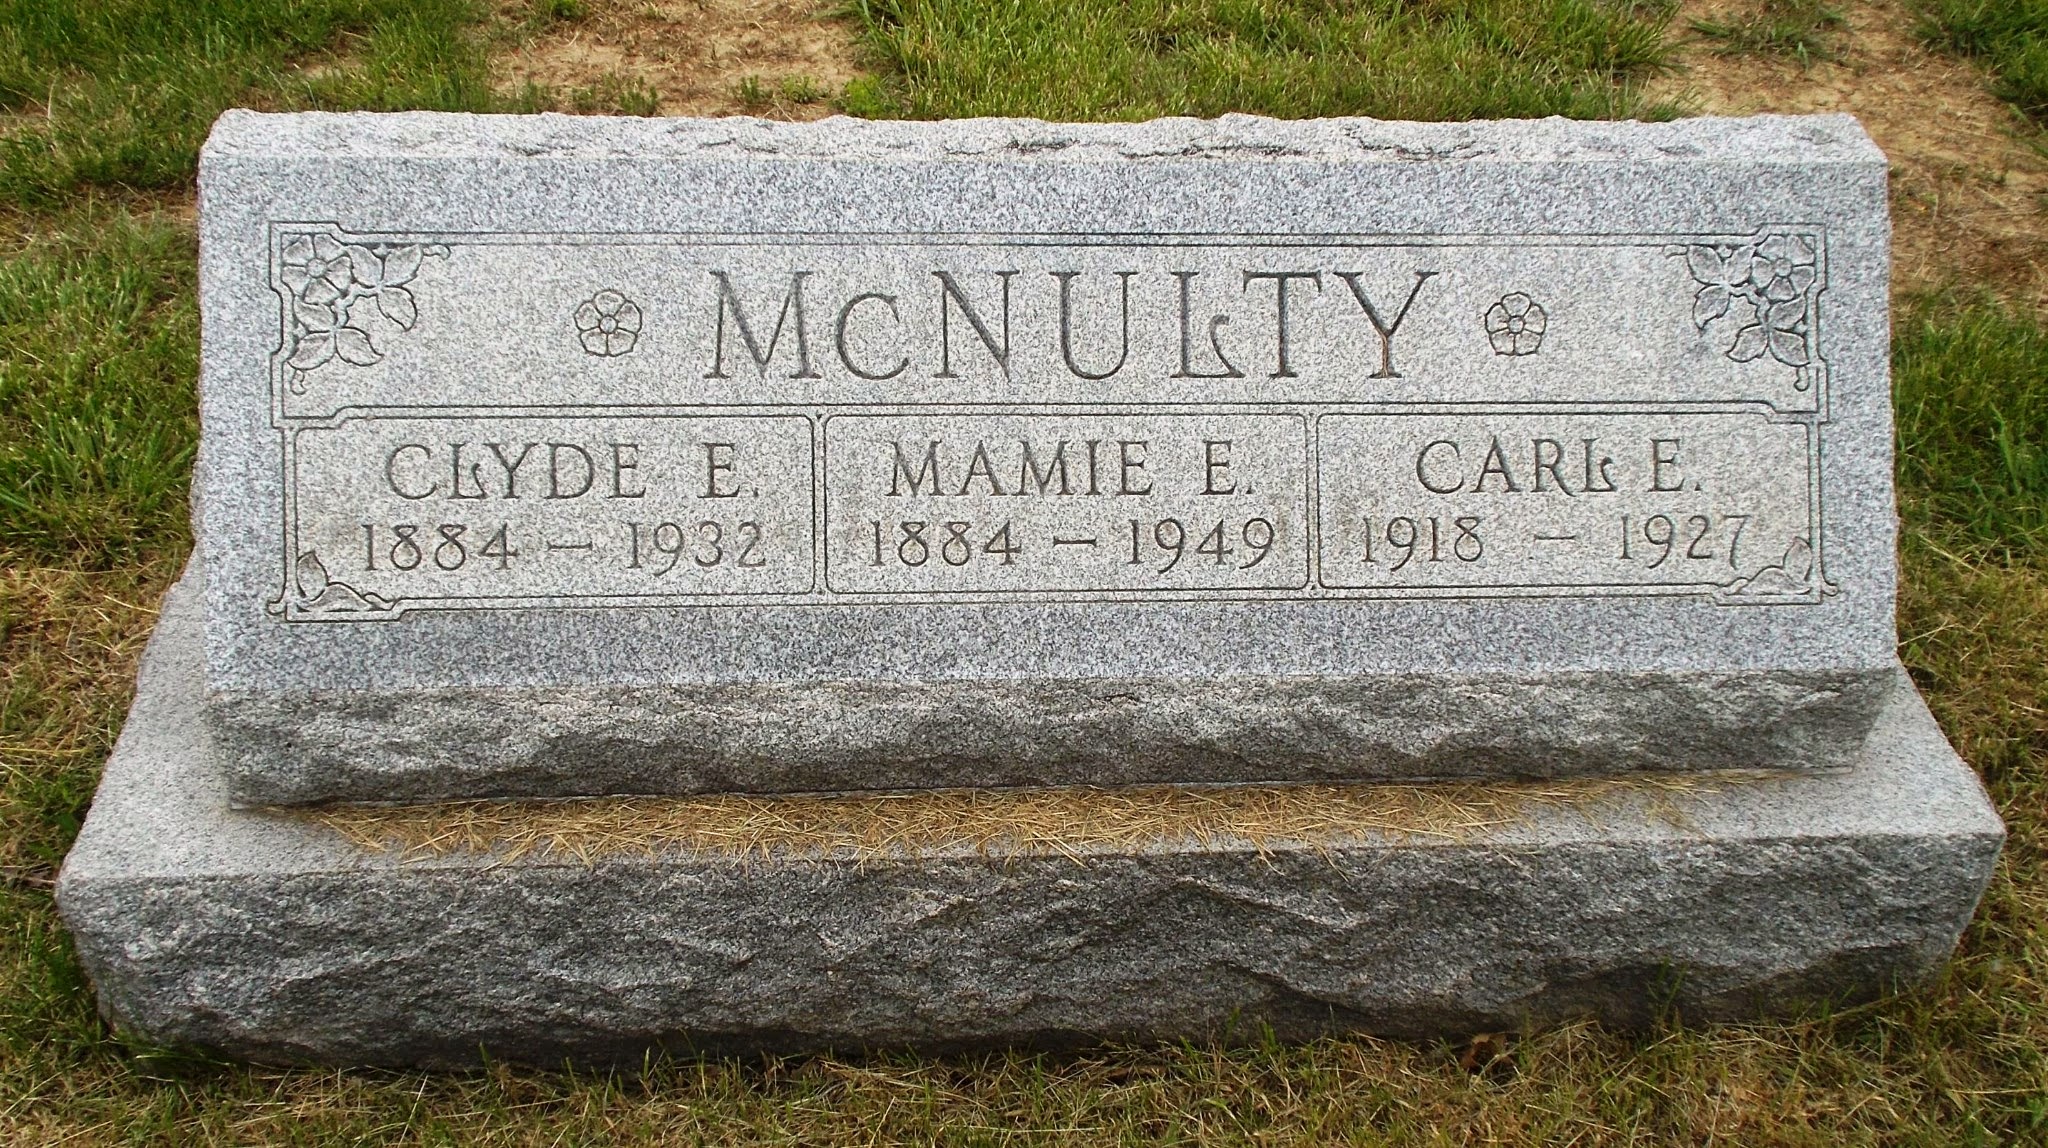 Carl E McNulty